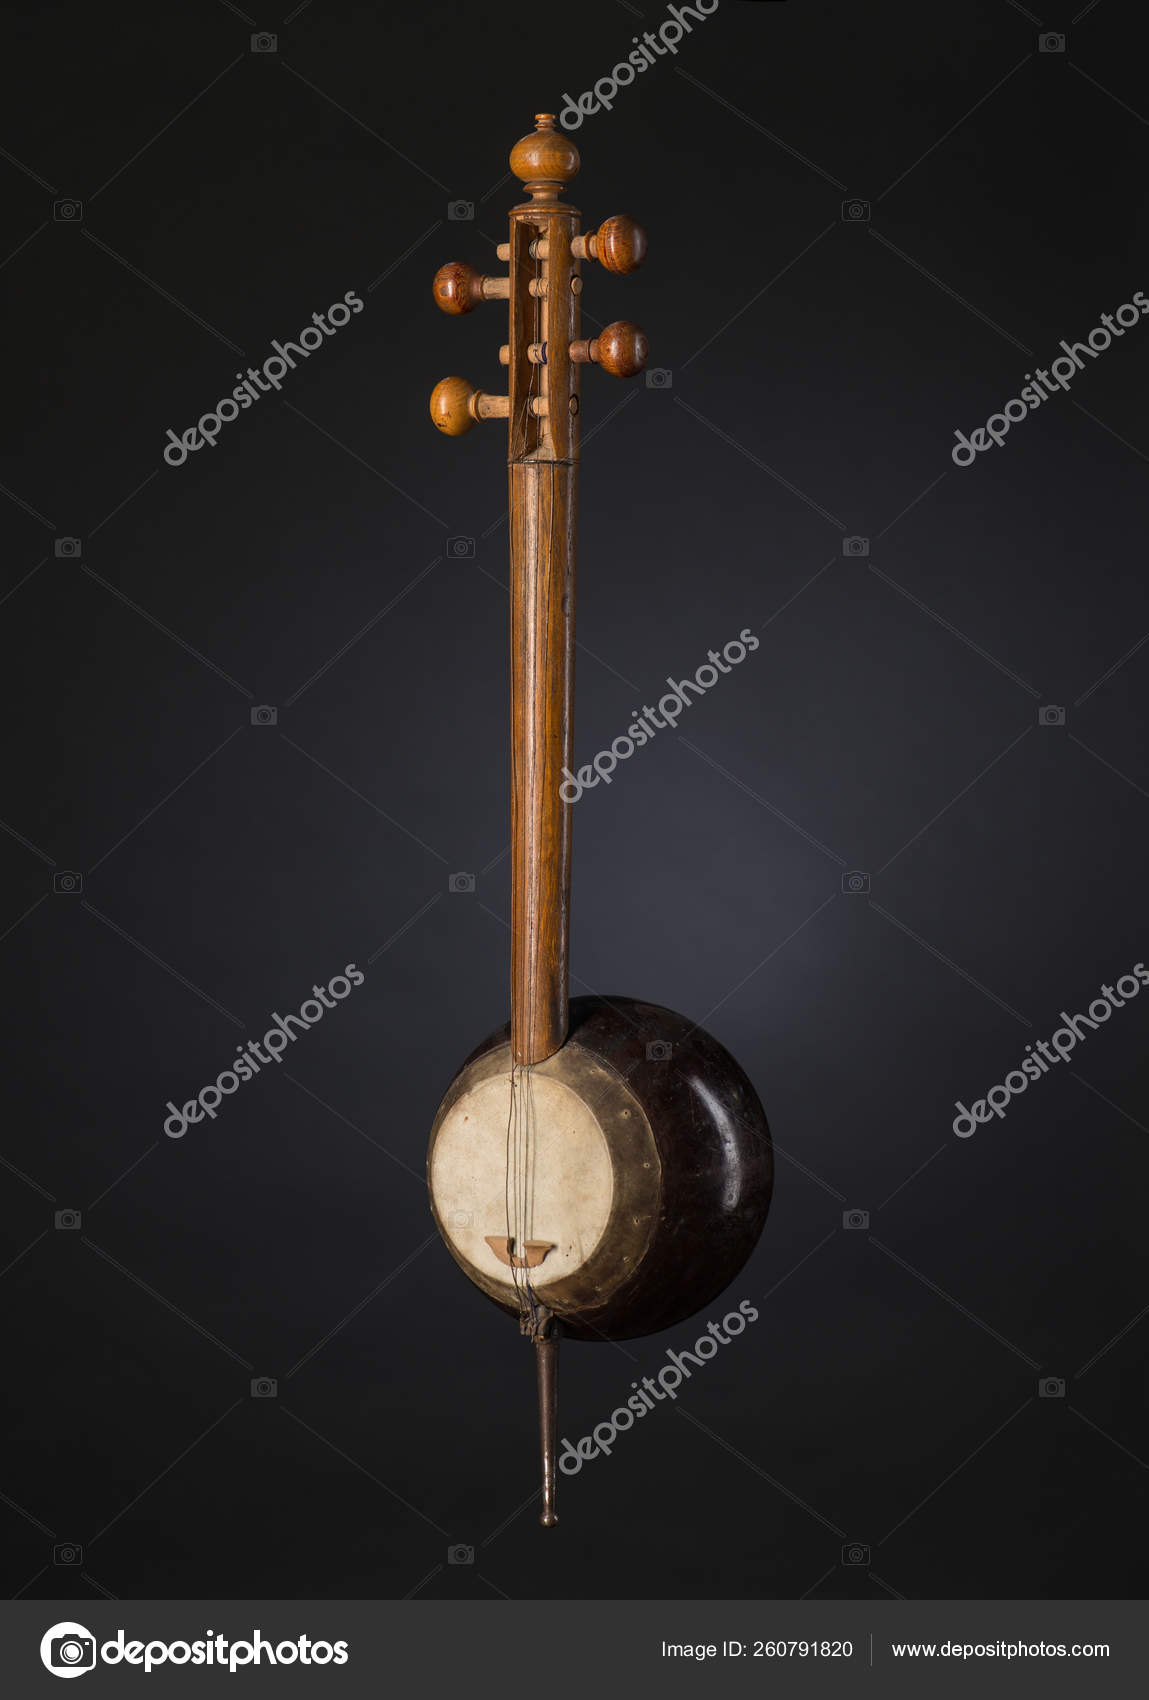 asian music string instrument